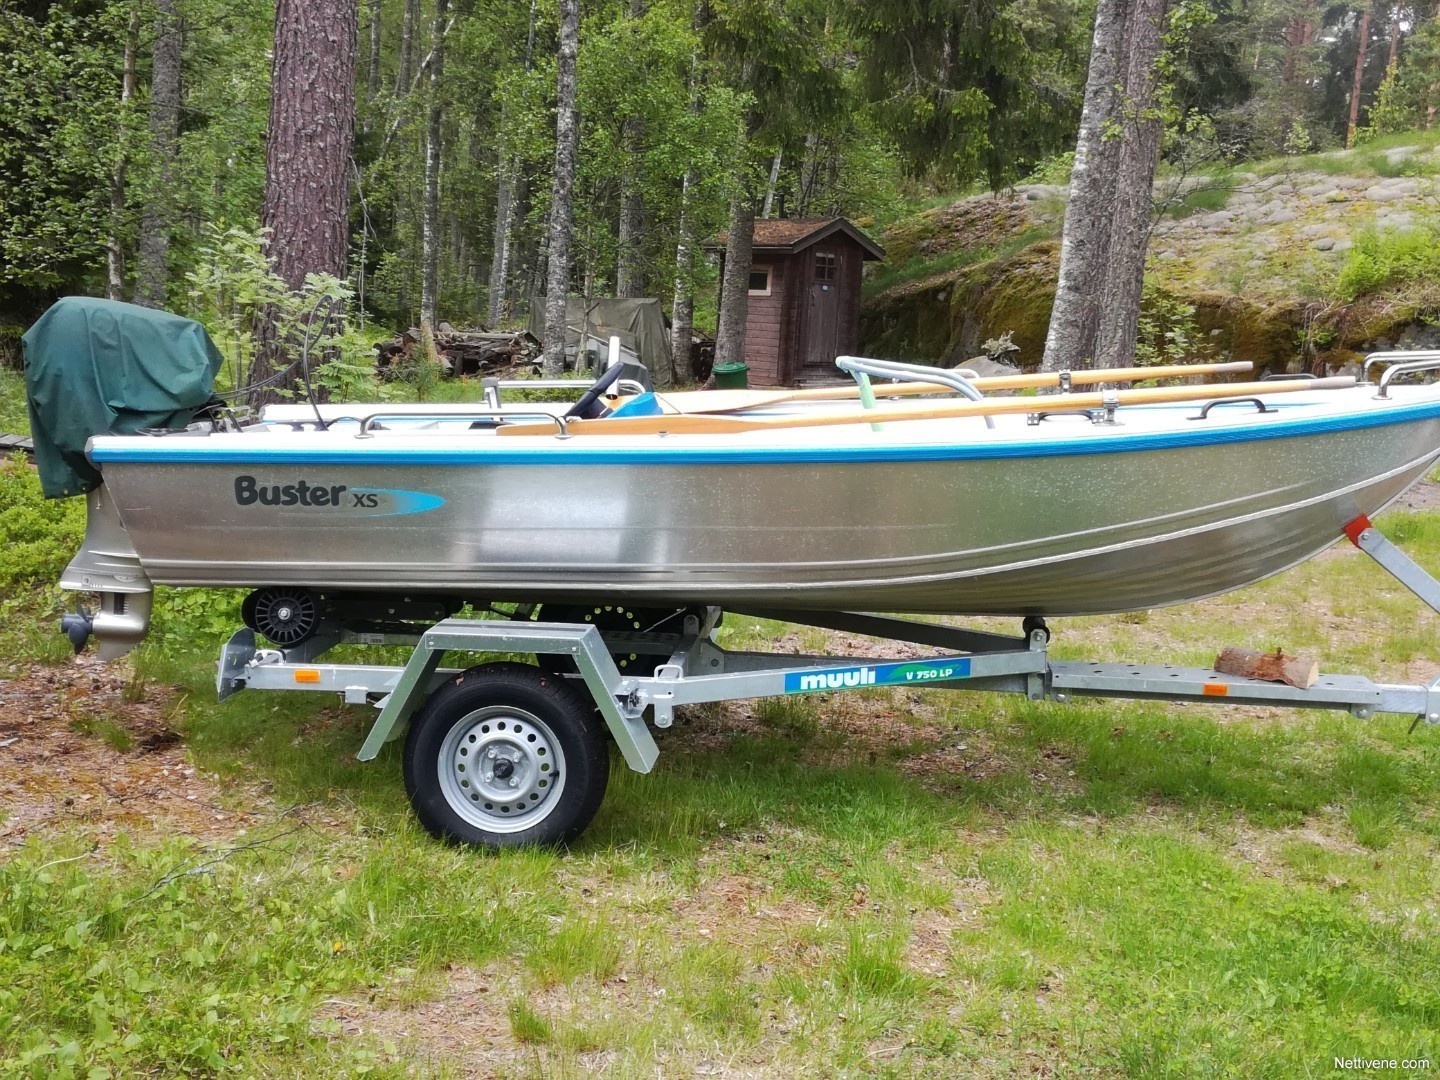 Buster Xs motor boat 2012 - Hanko.